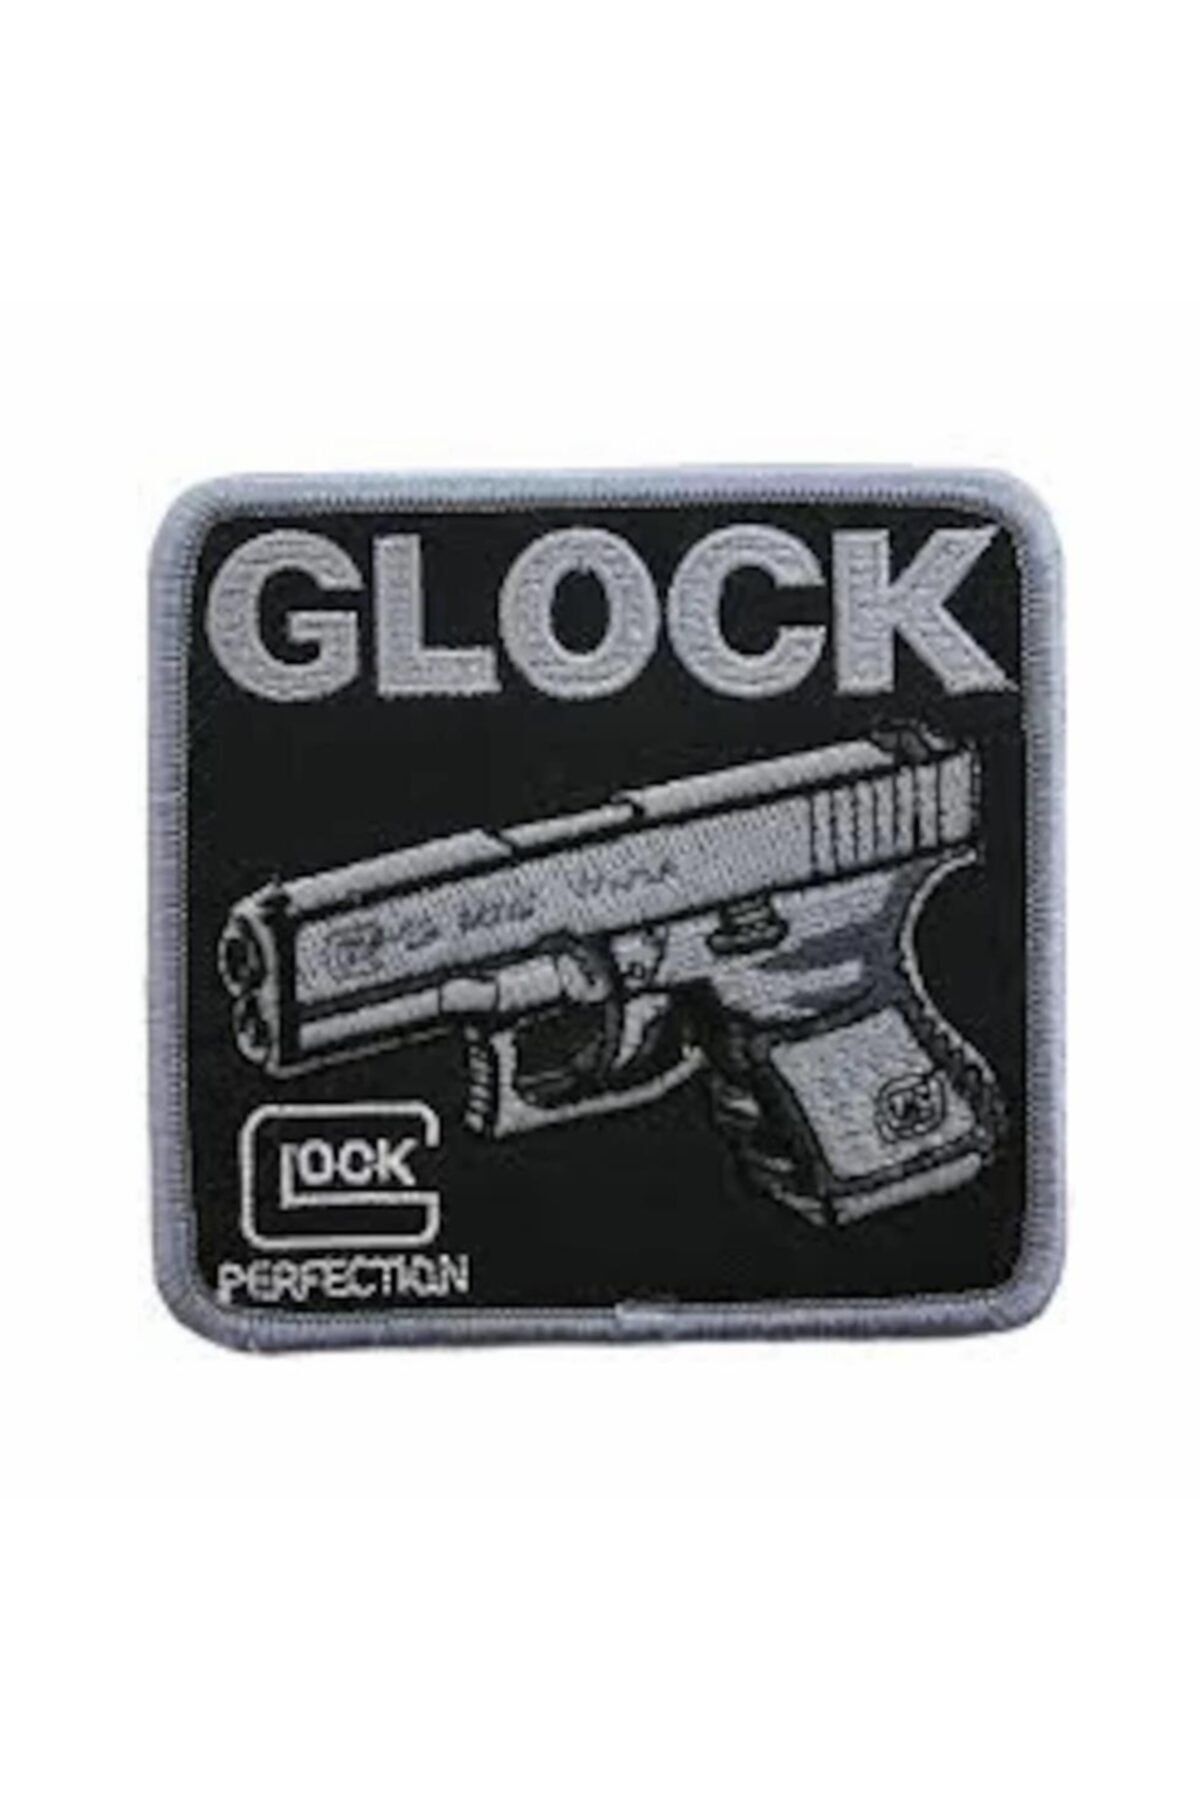 X-SHOP Glock Gun Tabanca Patches Arma Kot Yaması